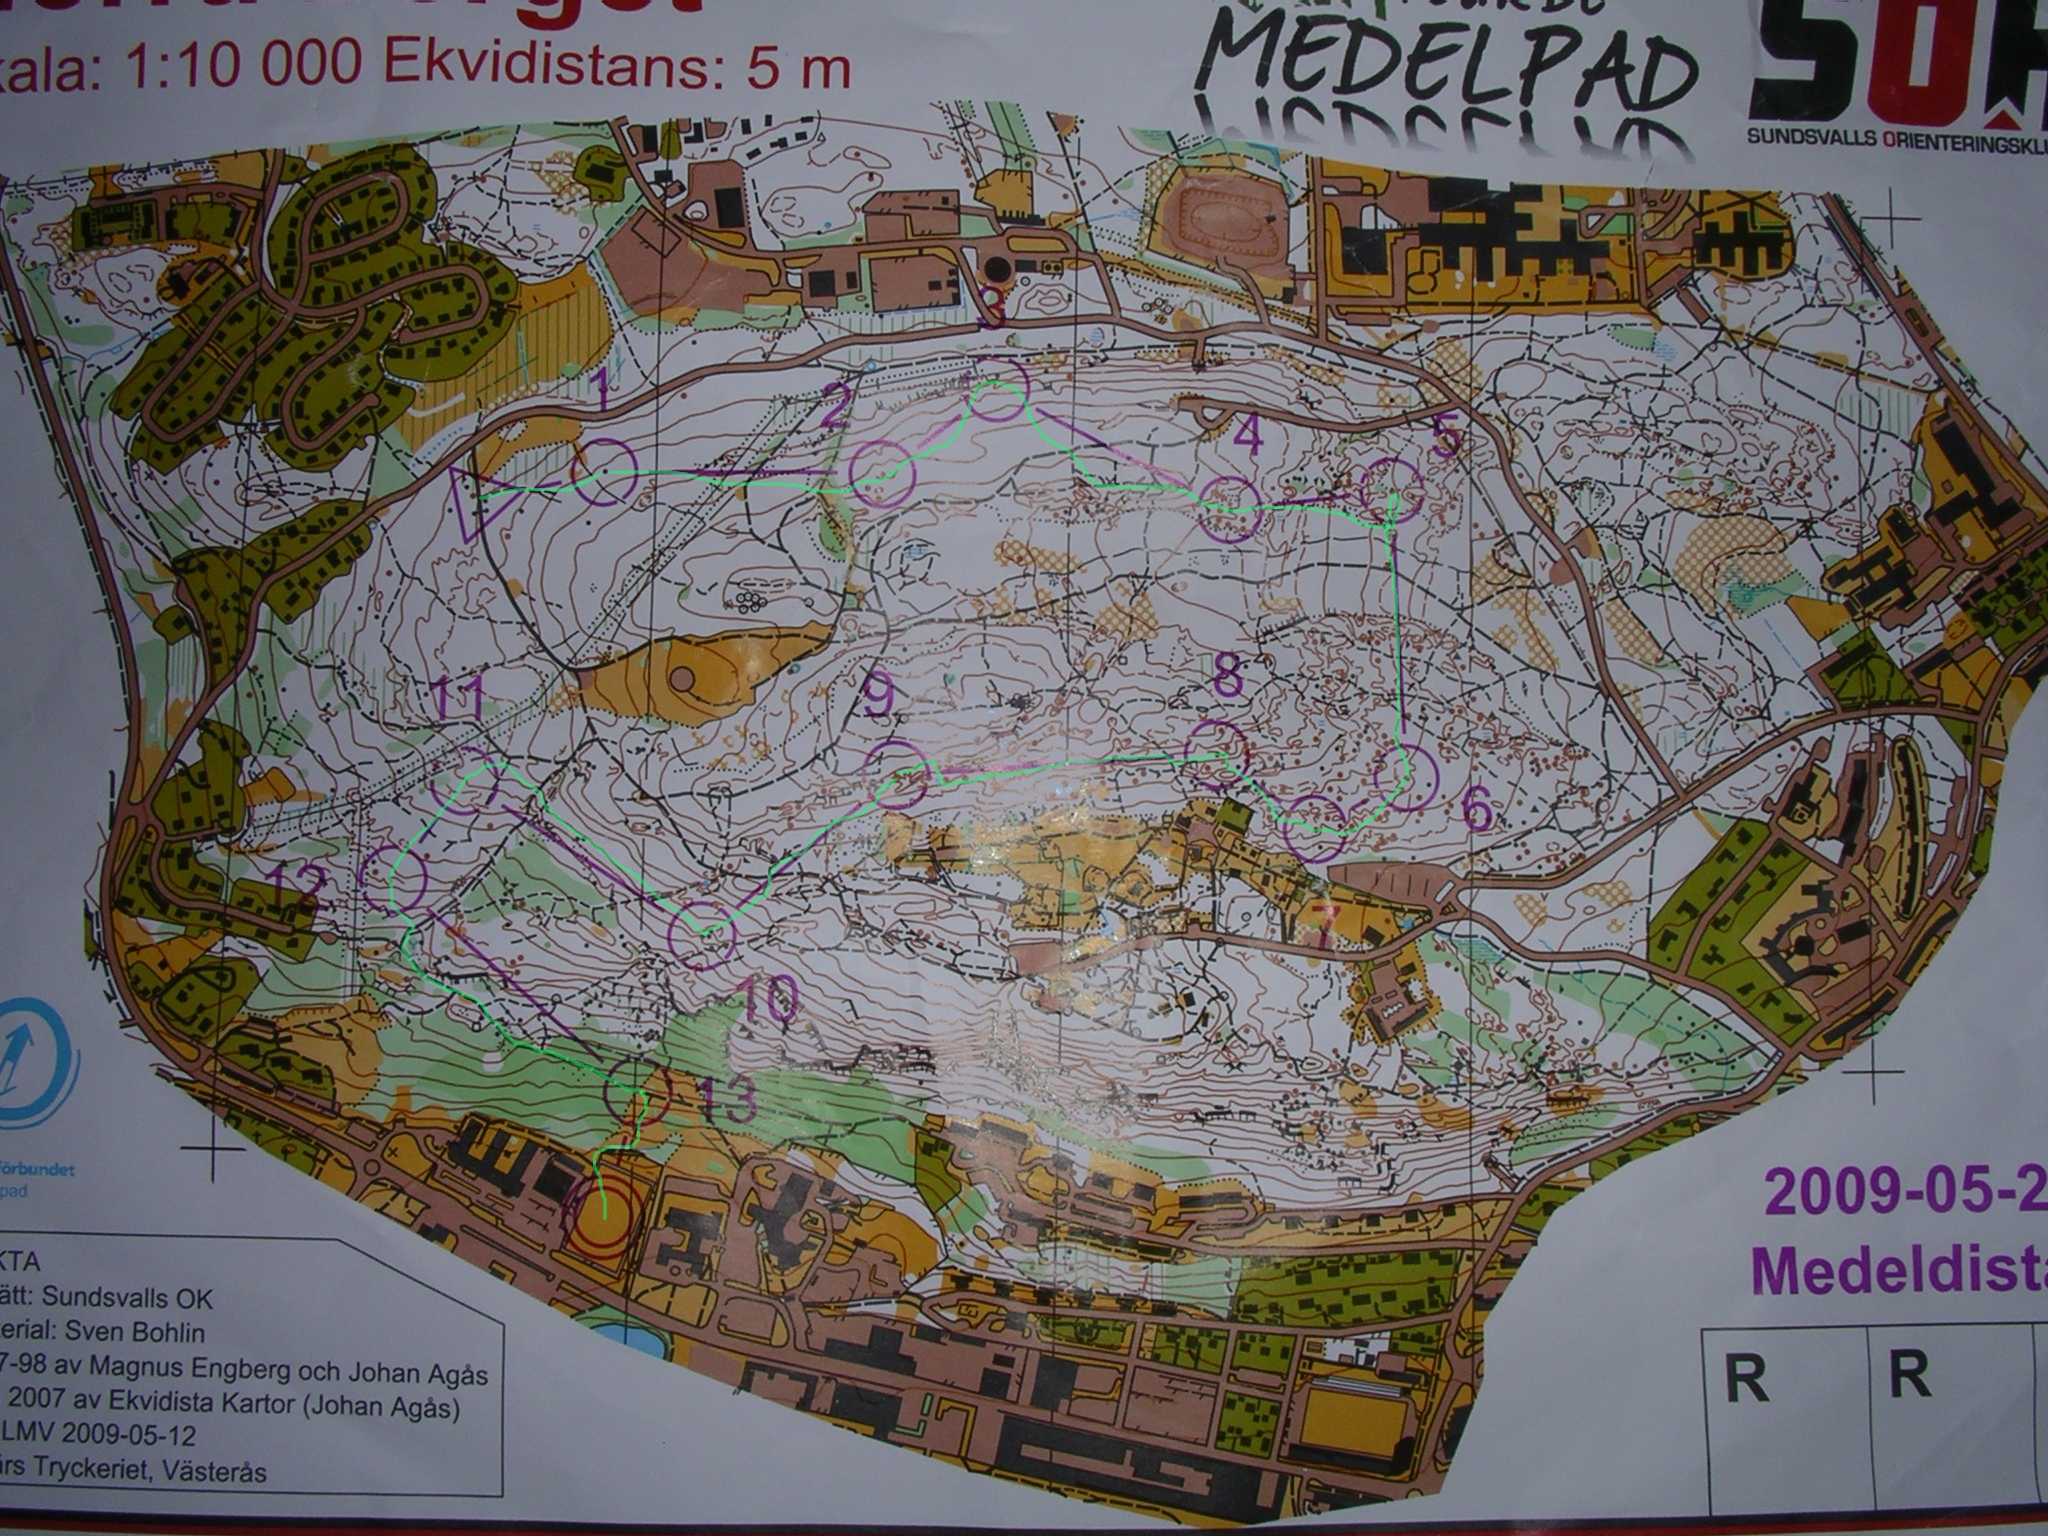 Tour de Medelpad - Sundsvallsträffen Medel (21.05.2009)